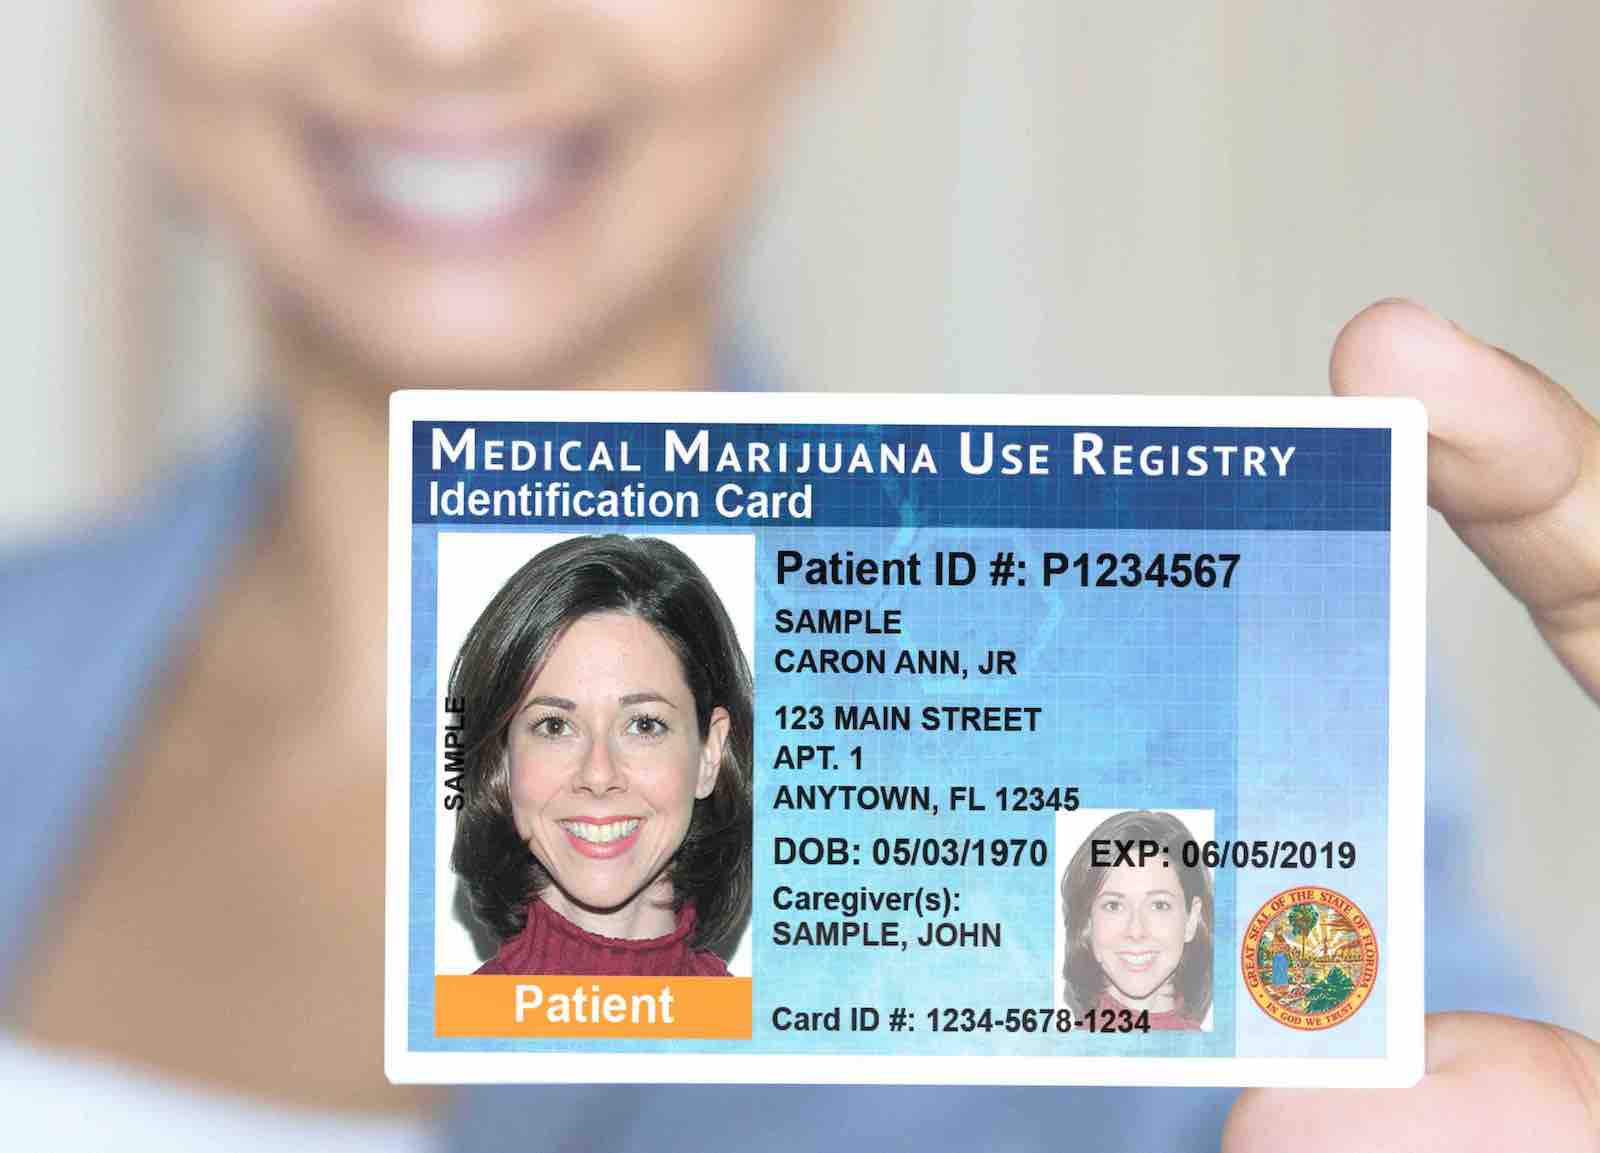 How to get Access to Medical Marijuana in Florida